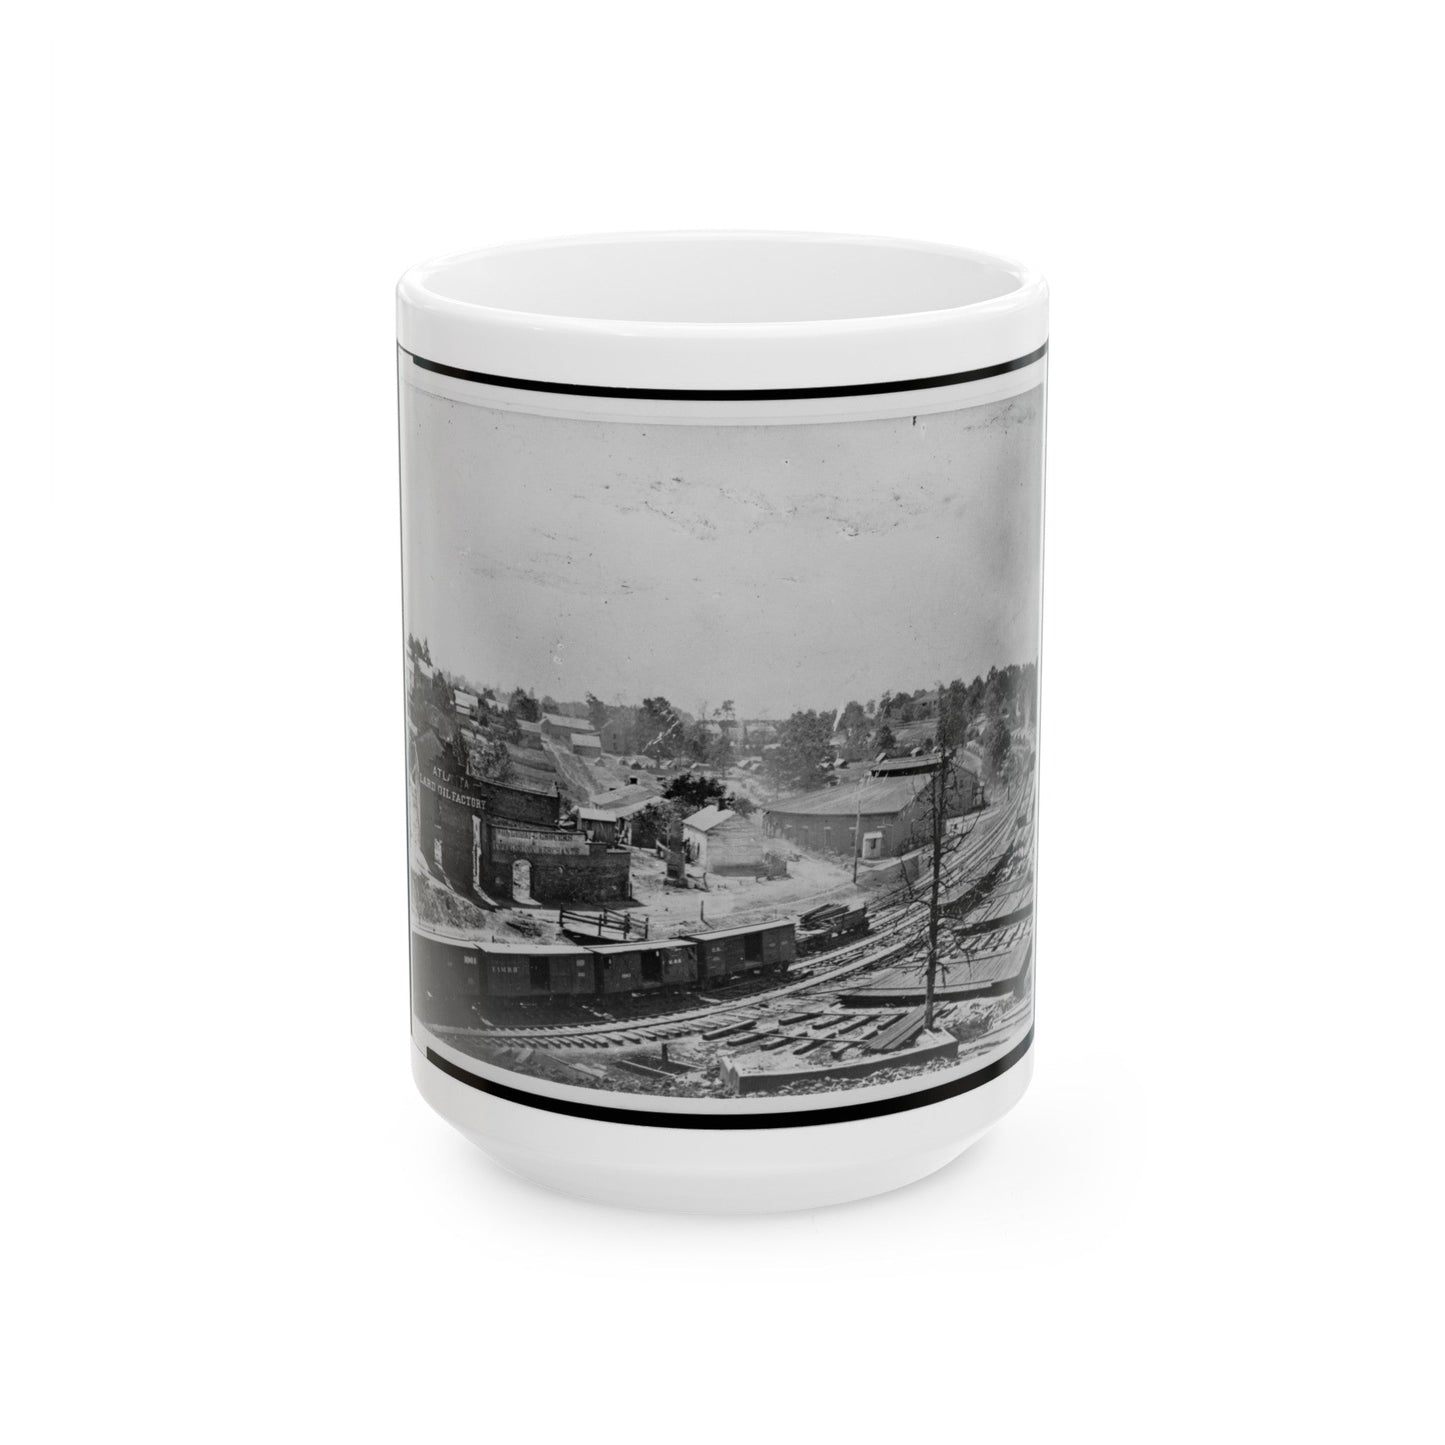 View Of Atlanta, Georgia, With Railroad Cars In Left Foreground (U.S. Civil War) White Coffee Mug